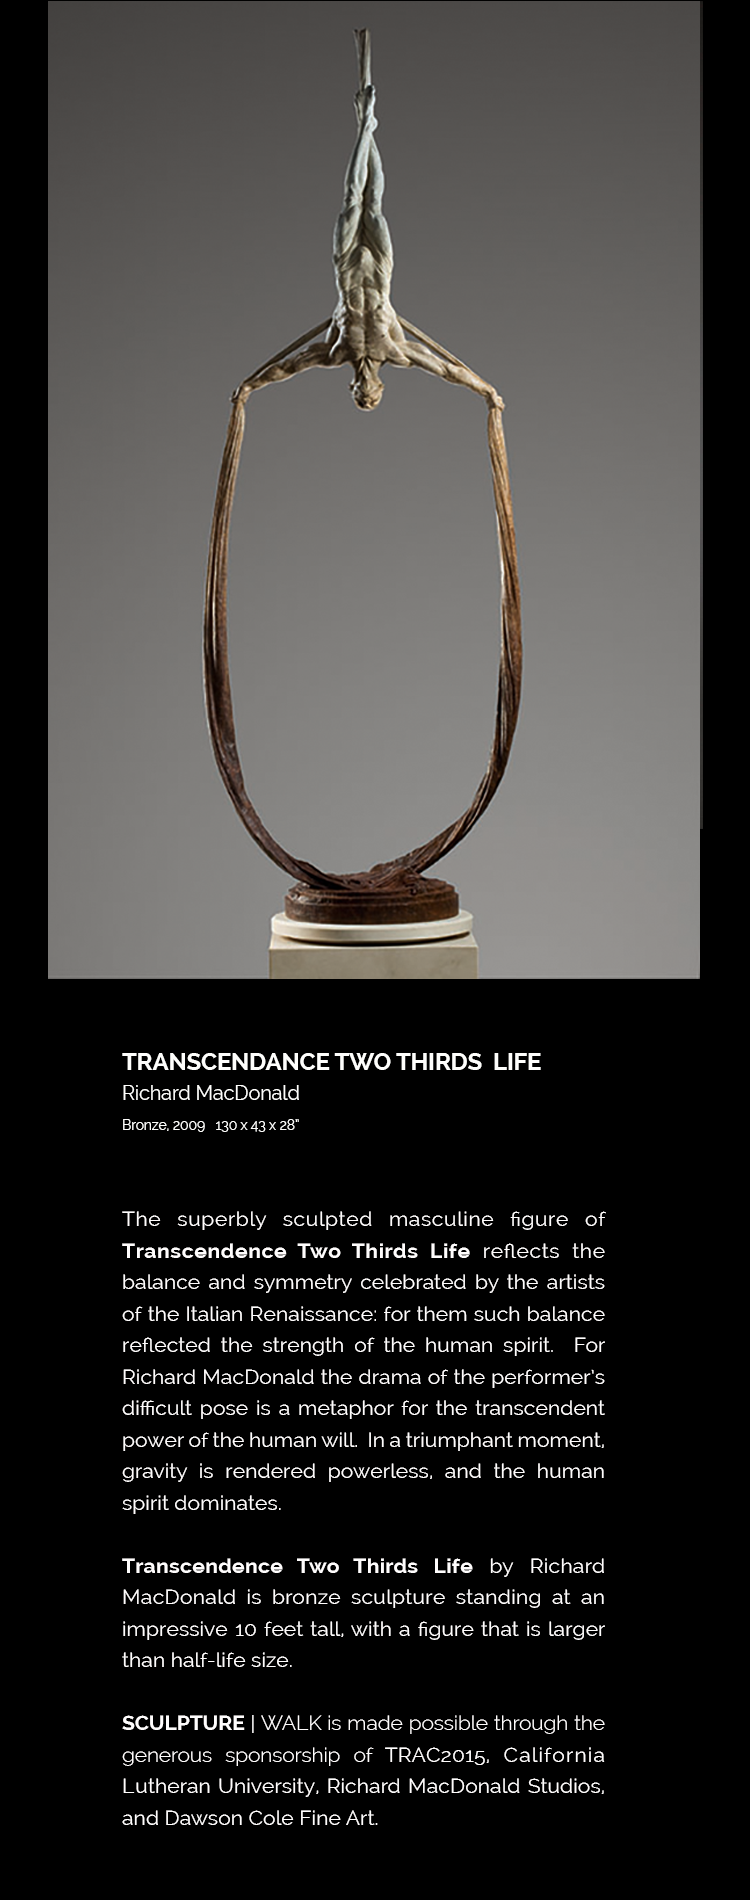 Transcendance Two Thirds by Richard MacDonald